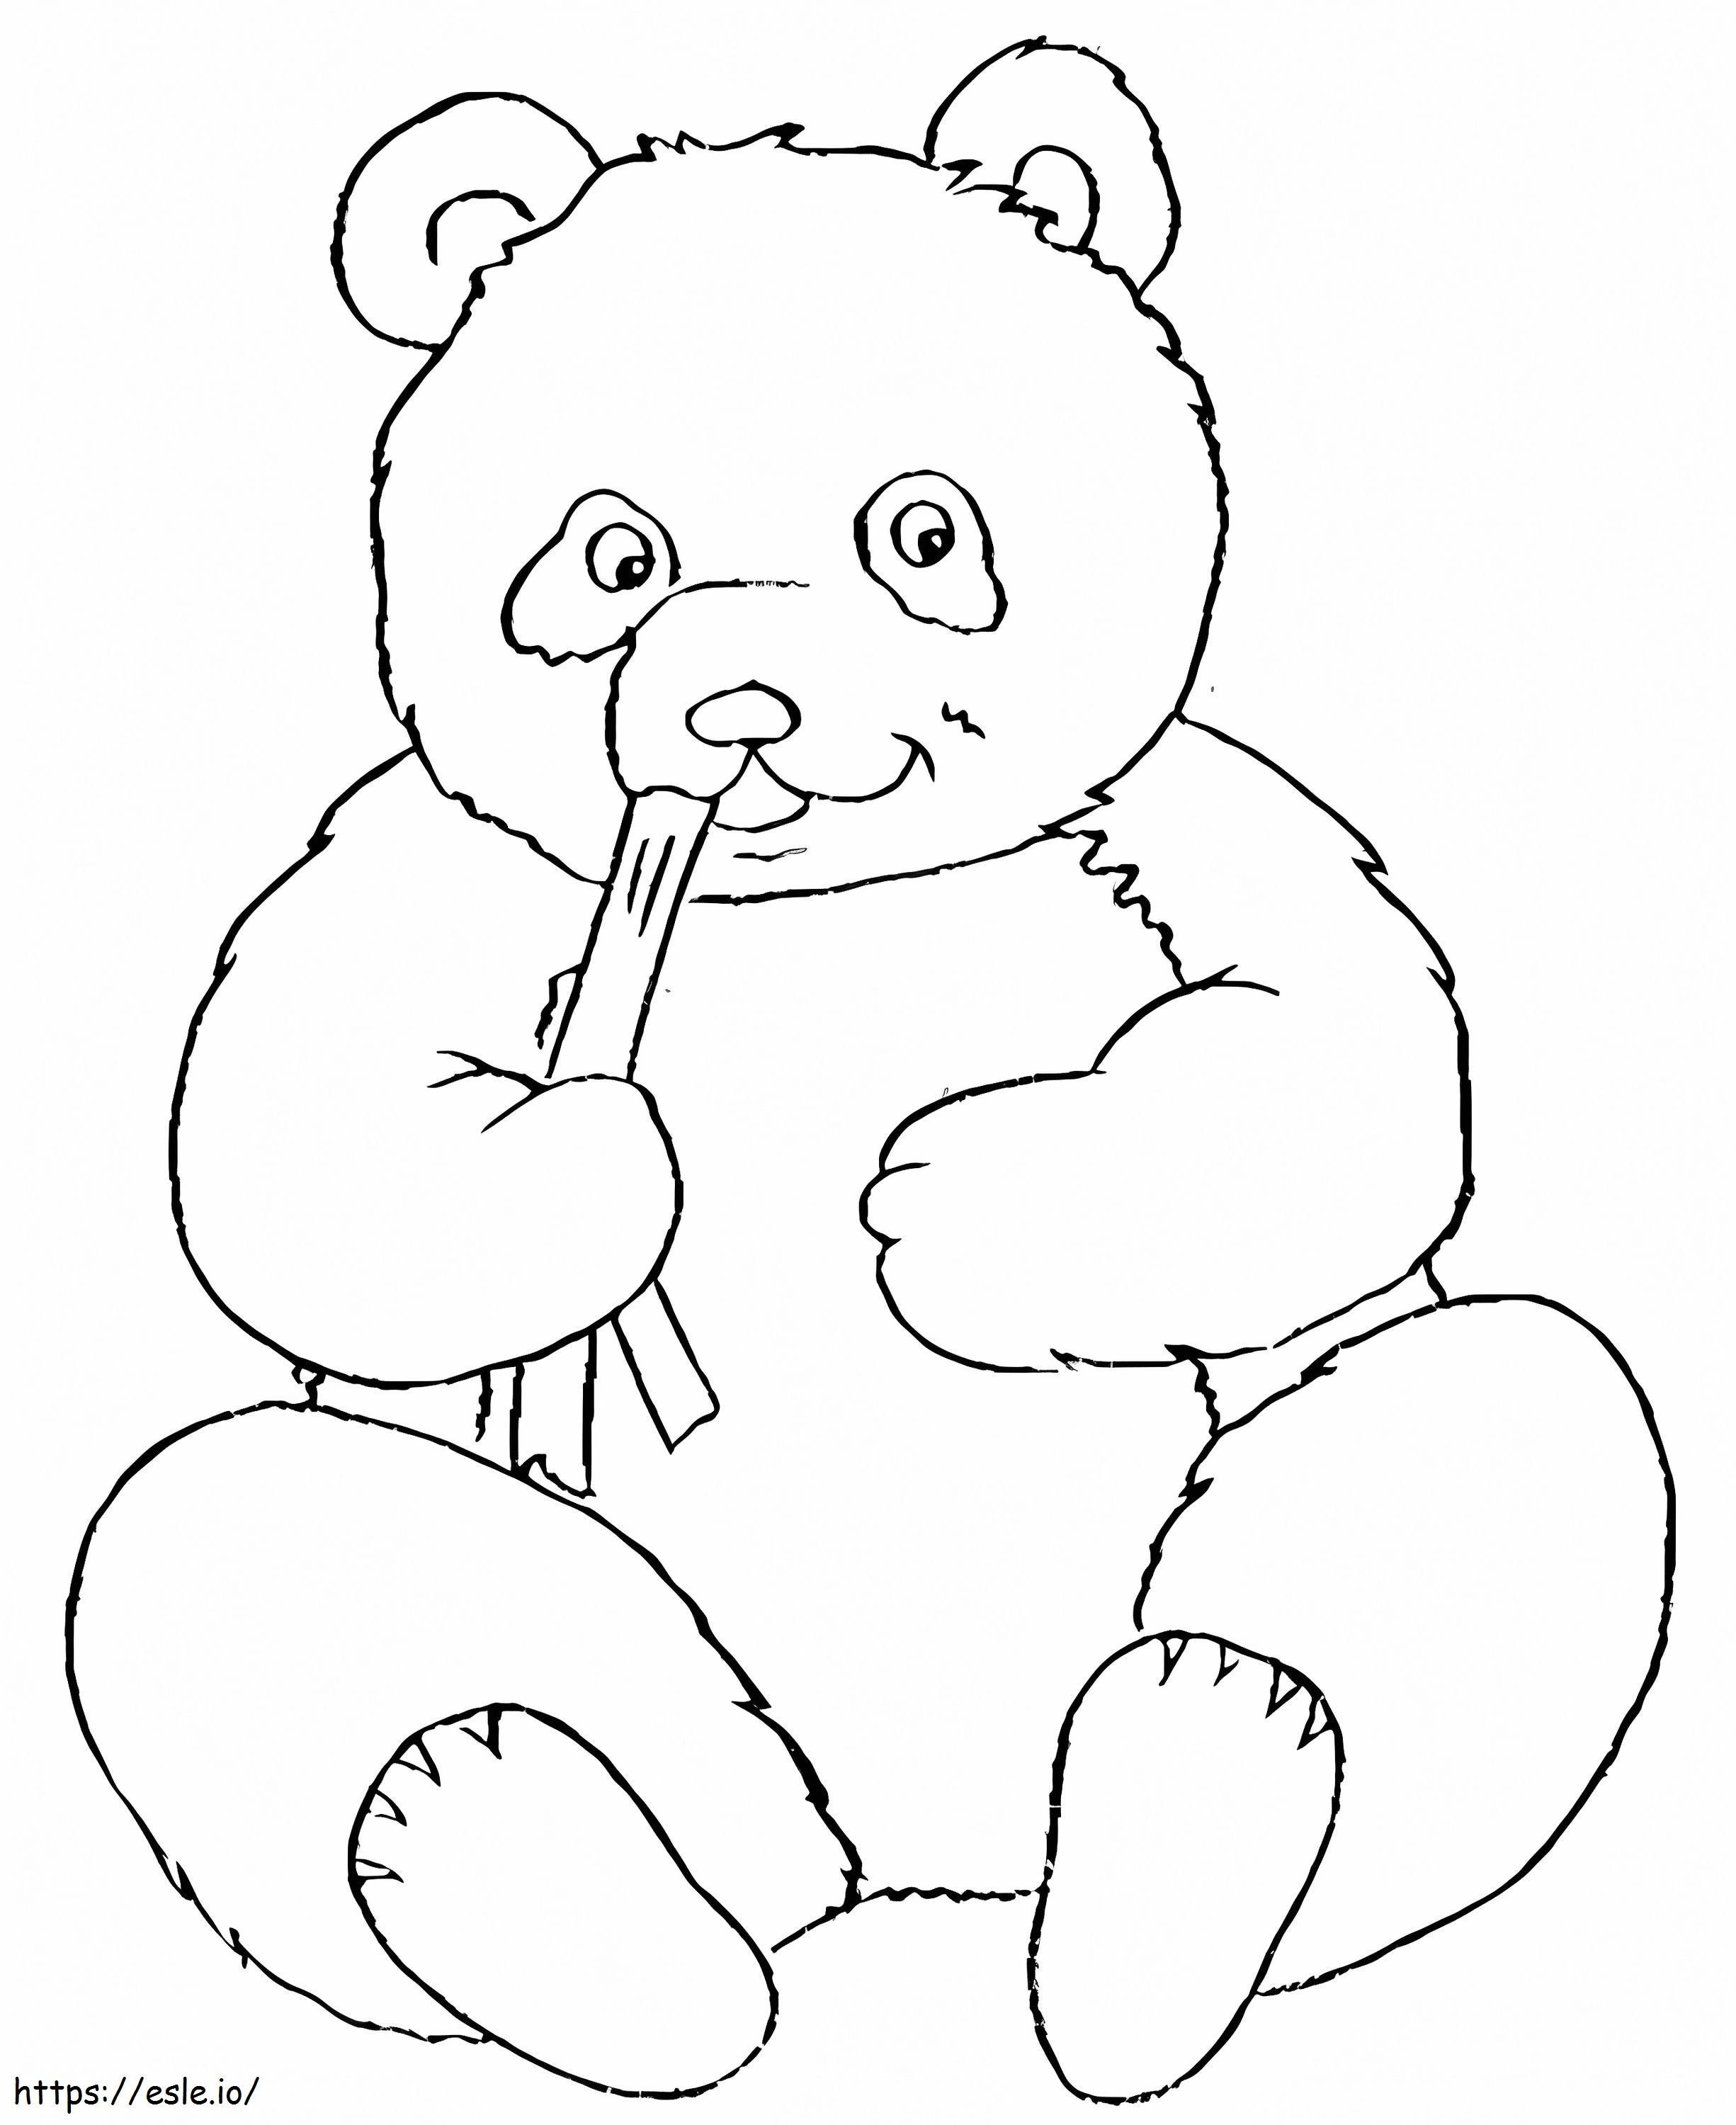 To Panda coloring page